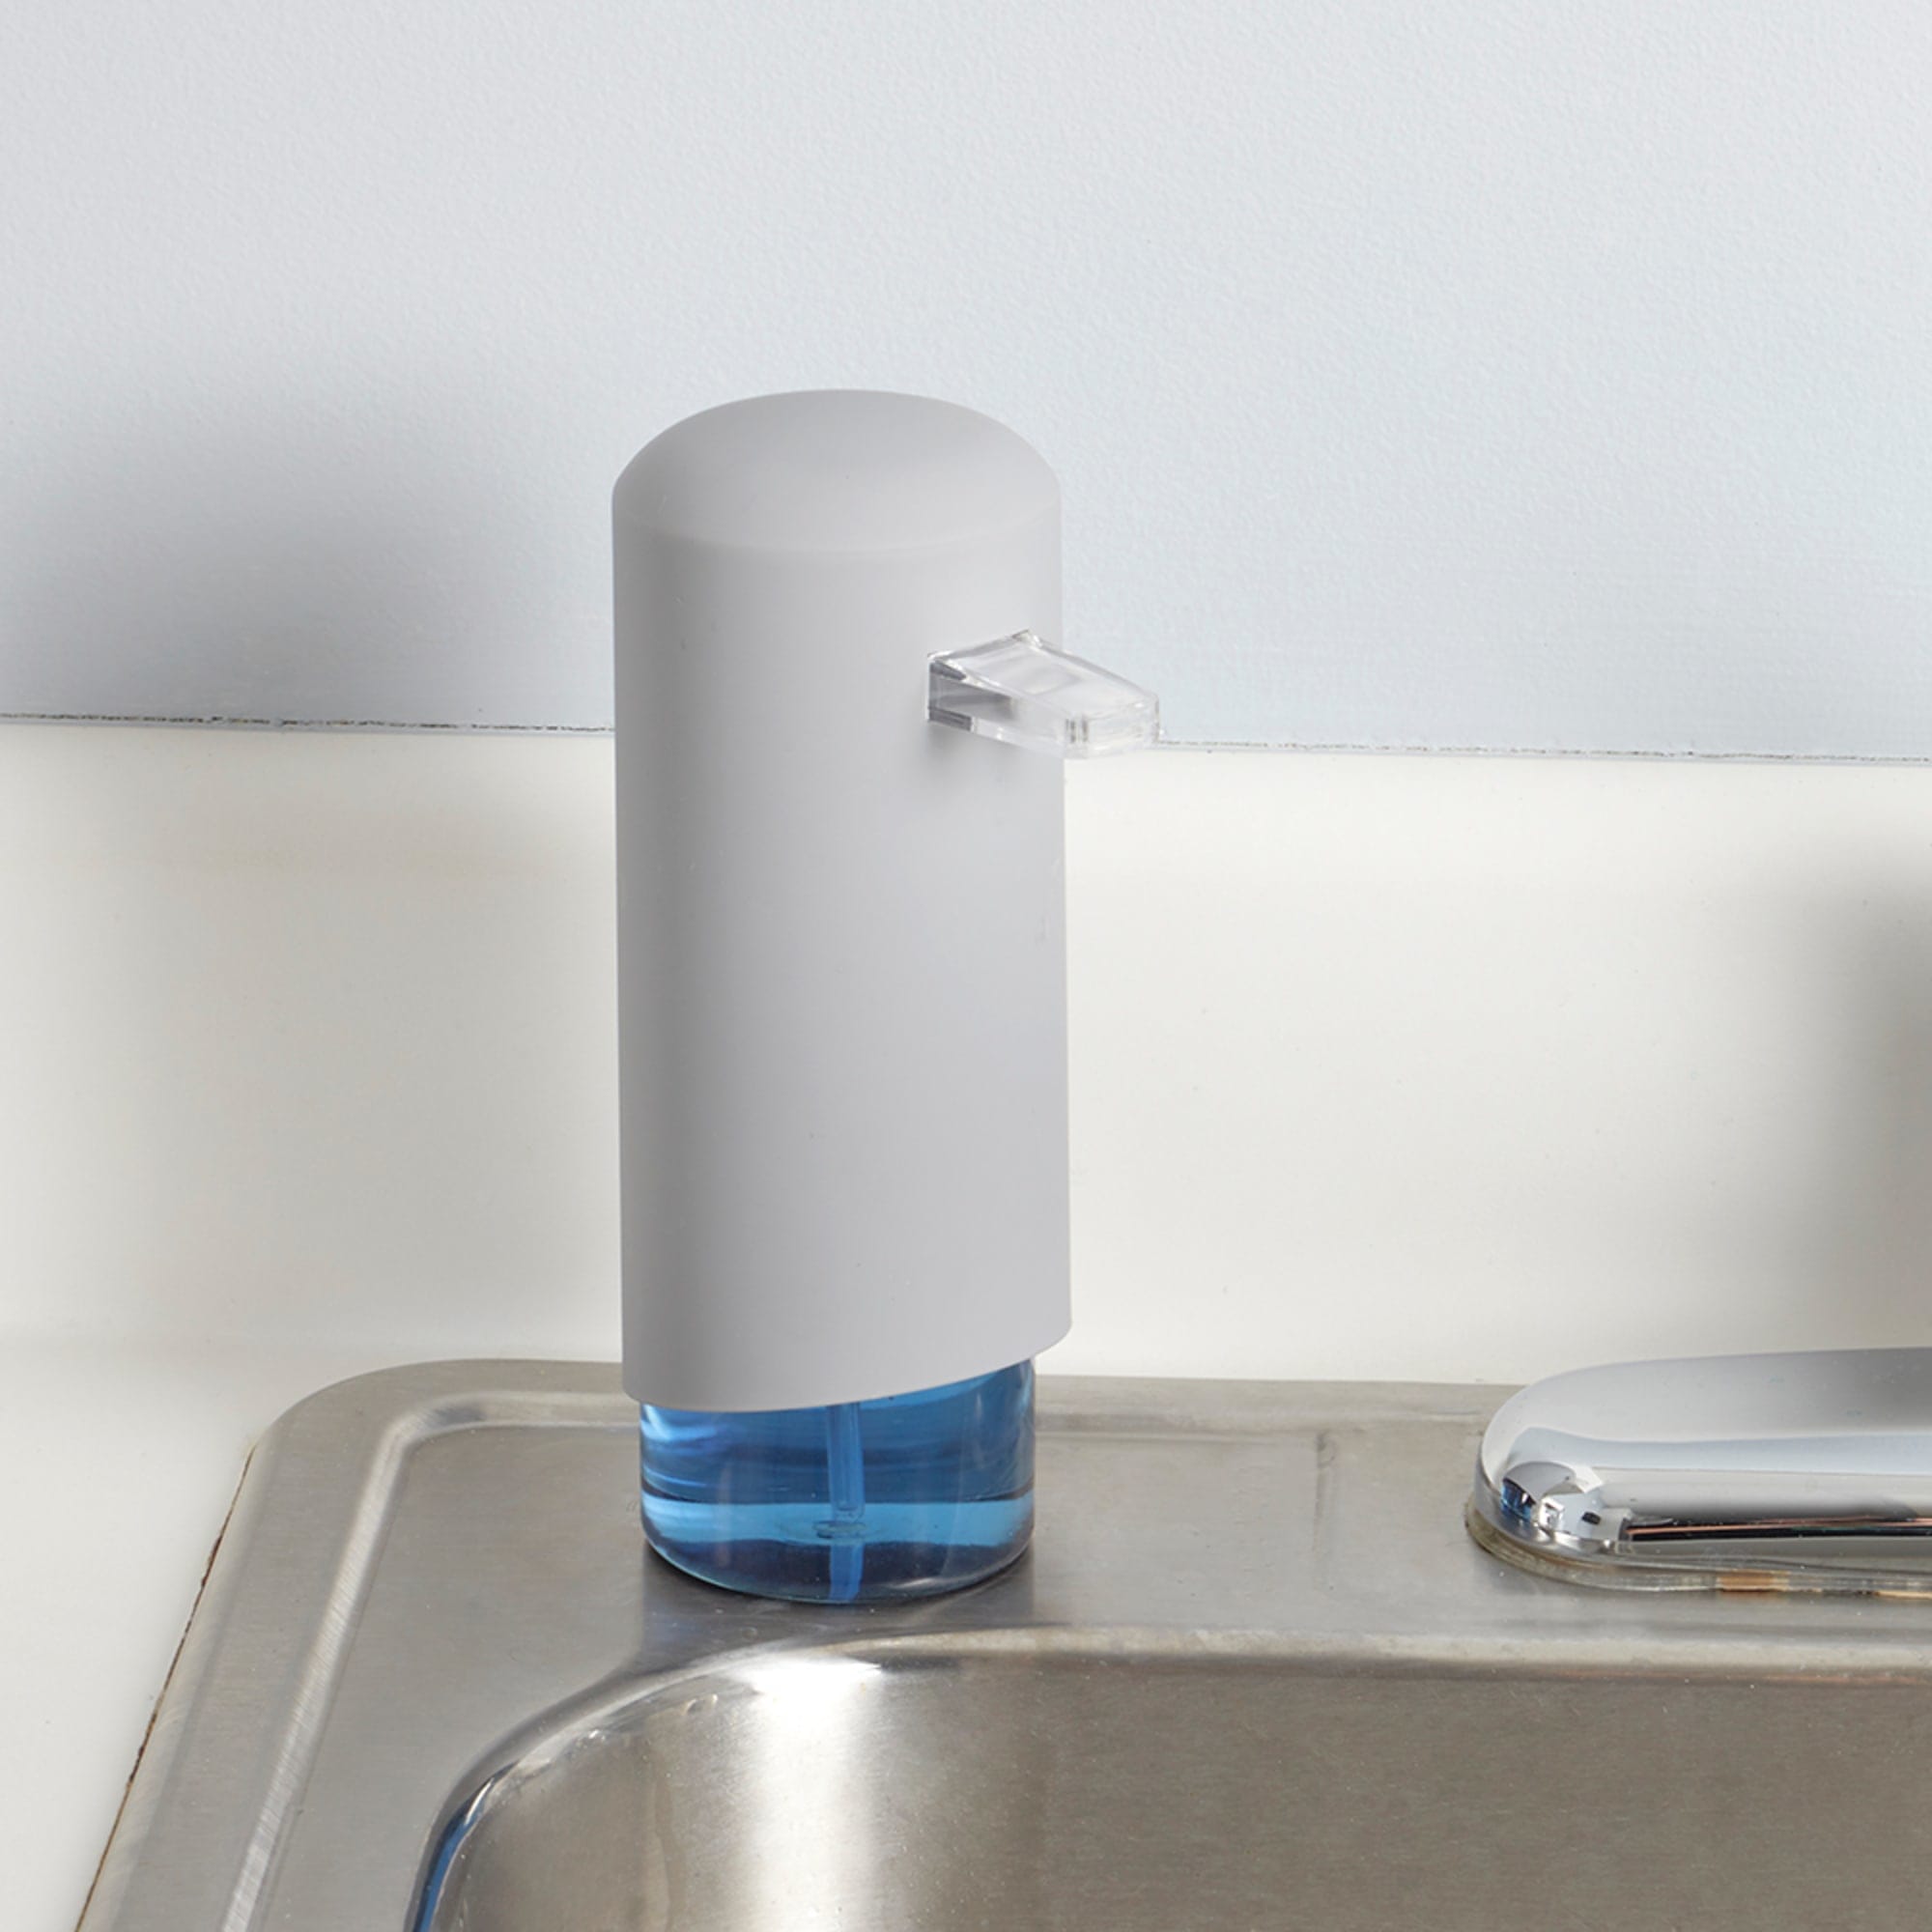 Home Basics 8 oz. Tall Narrow Countertop Foaming Soap Dispenser, Grey $4.00 EACH, CASE PACK OF 12